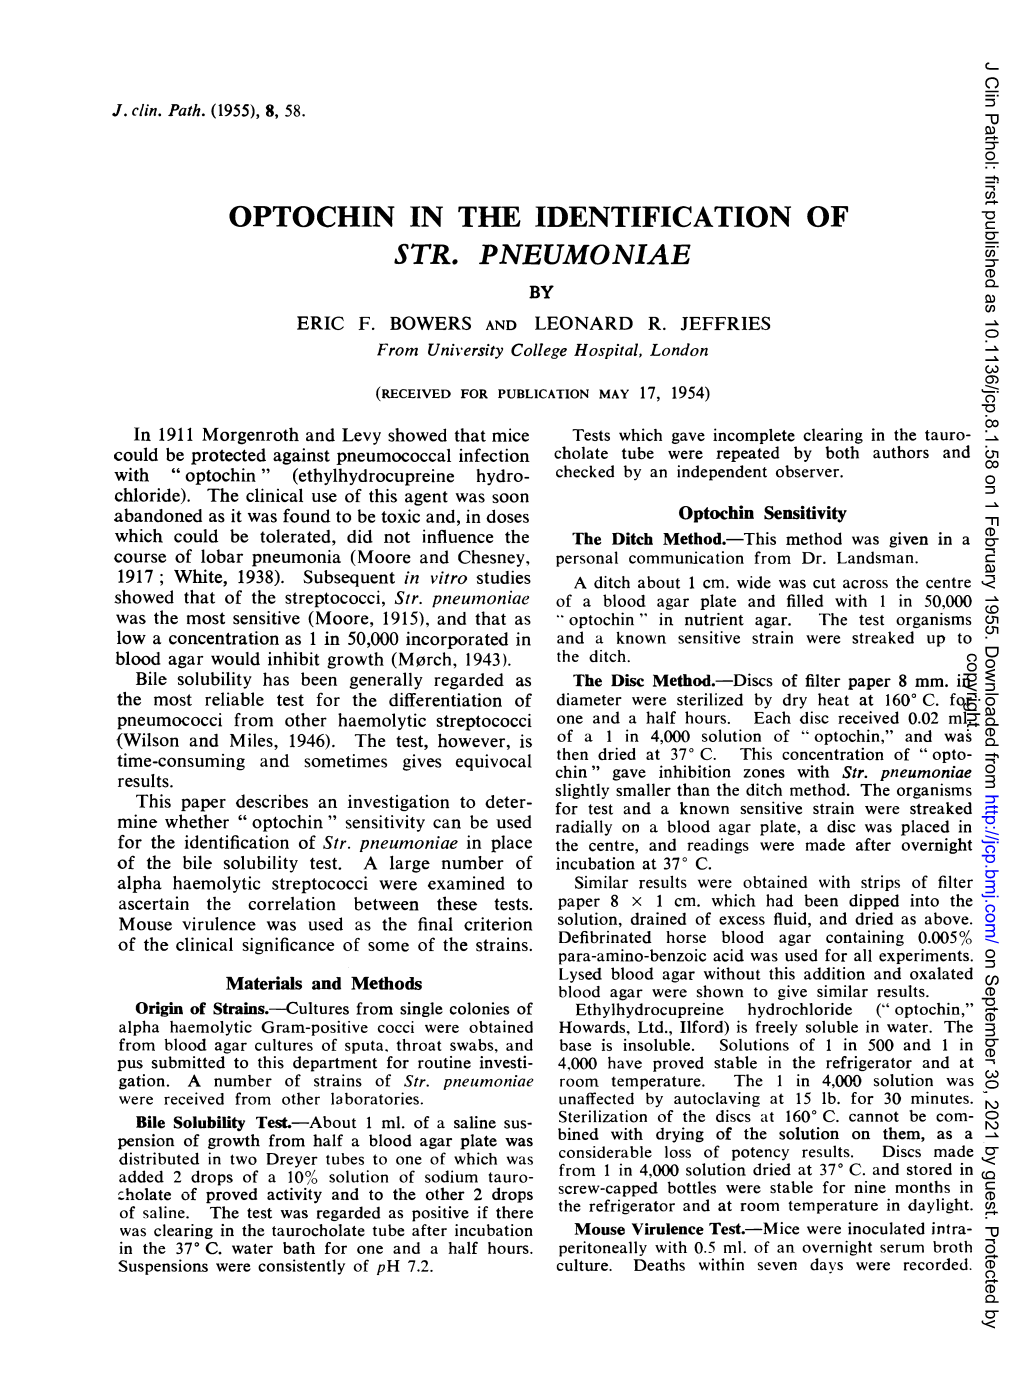 Optochin in Tie Identification of Str